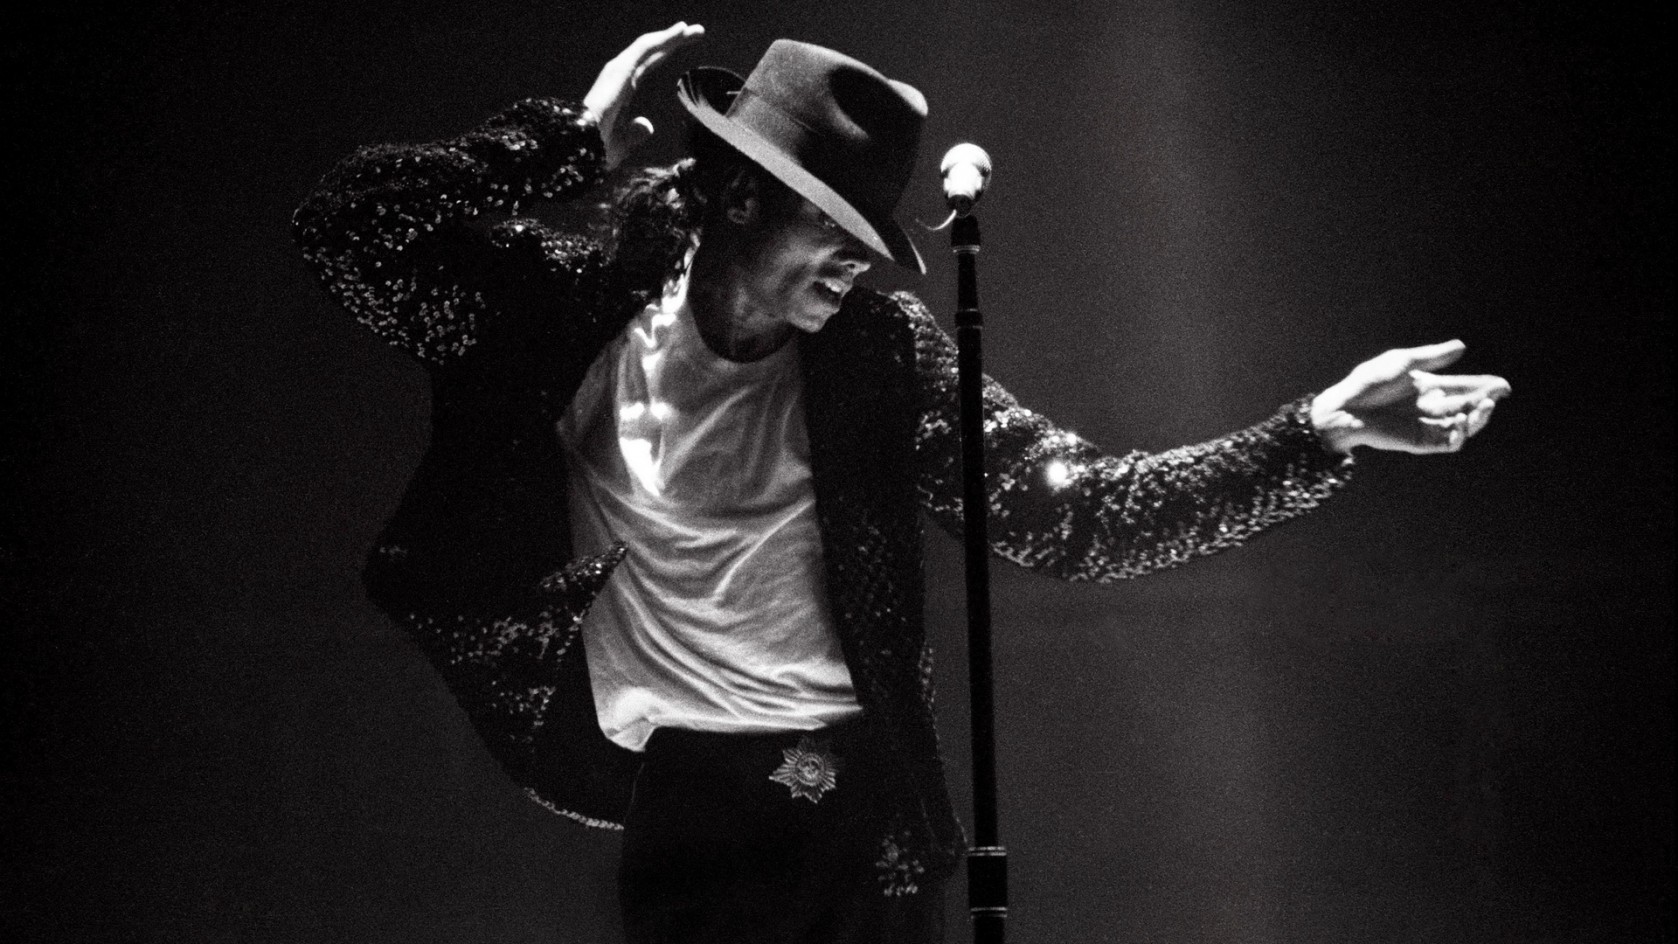 What Genre was Michael Jackson?